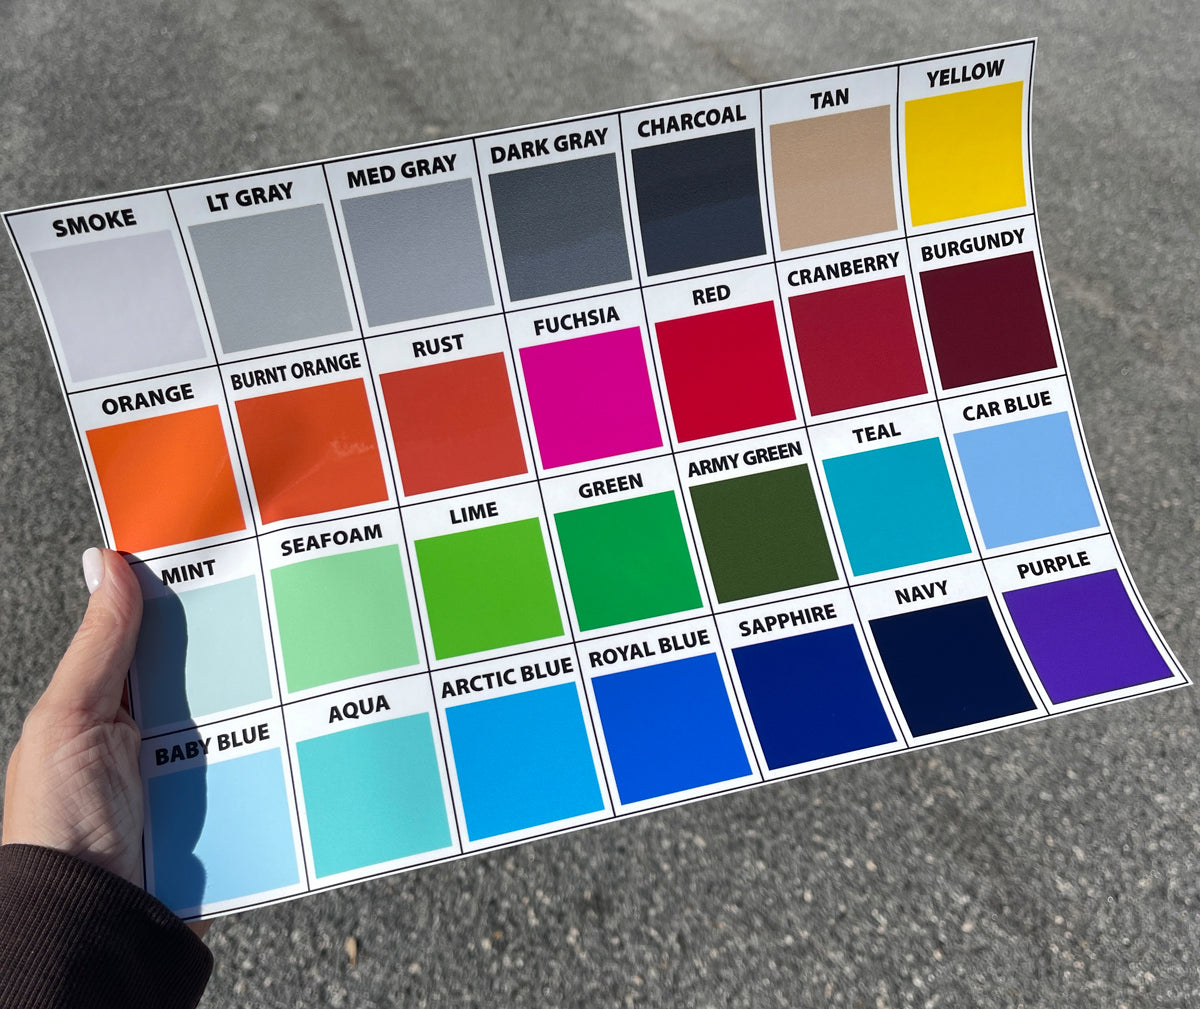 gray car paint colors samples